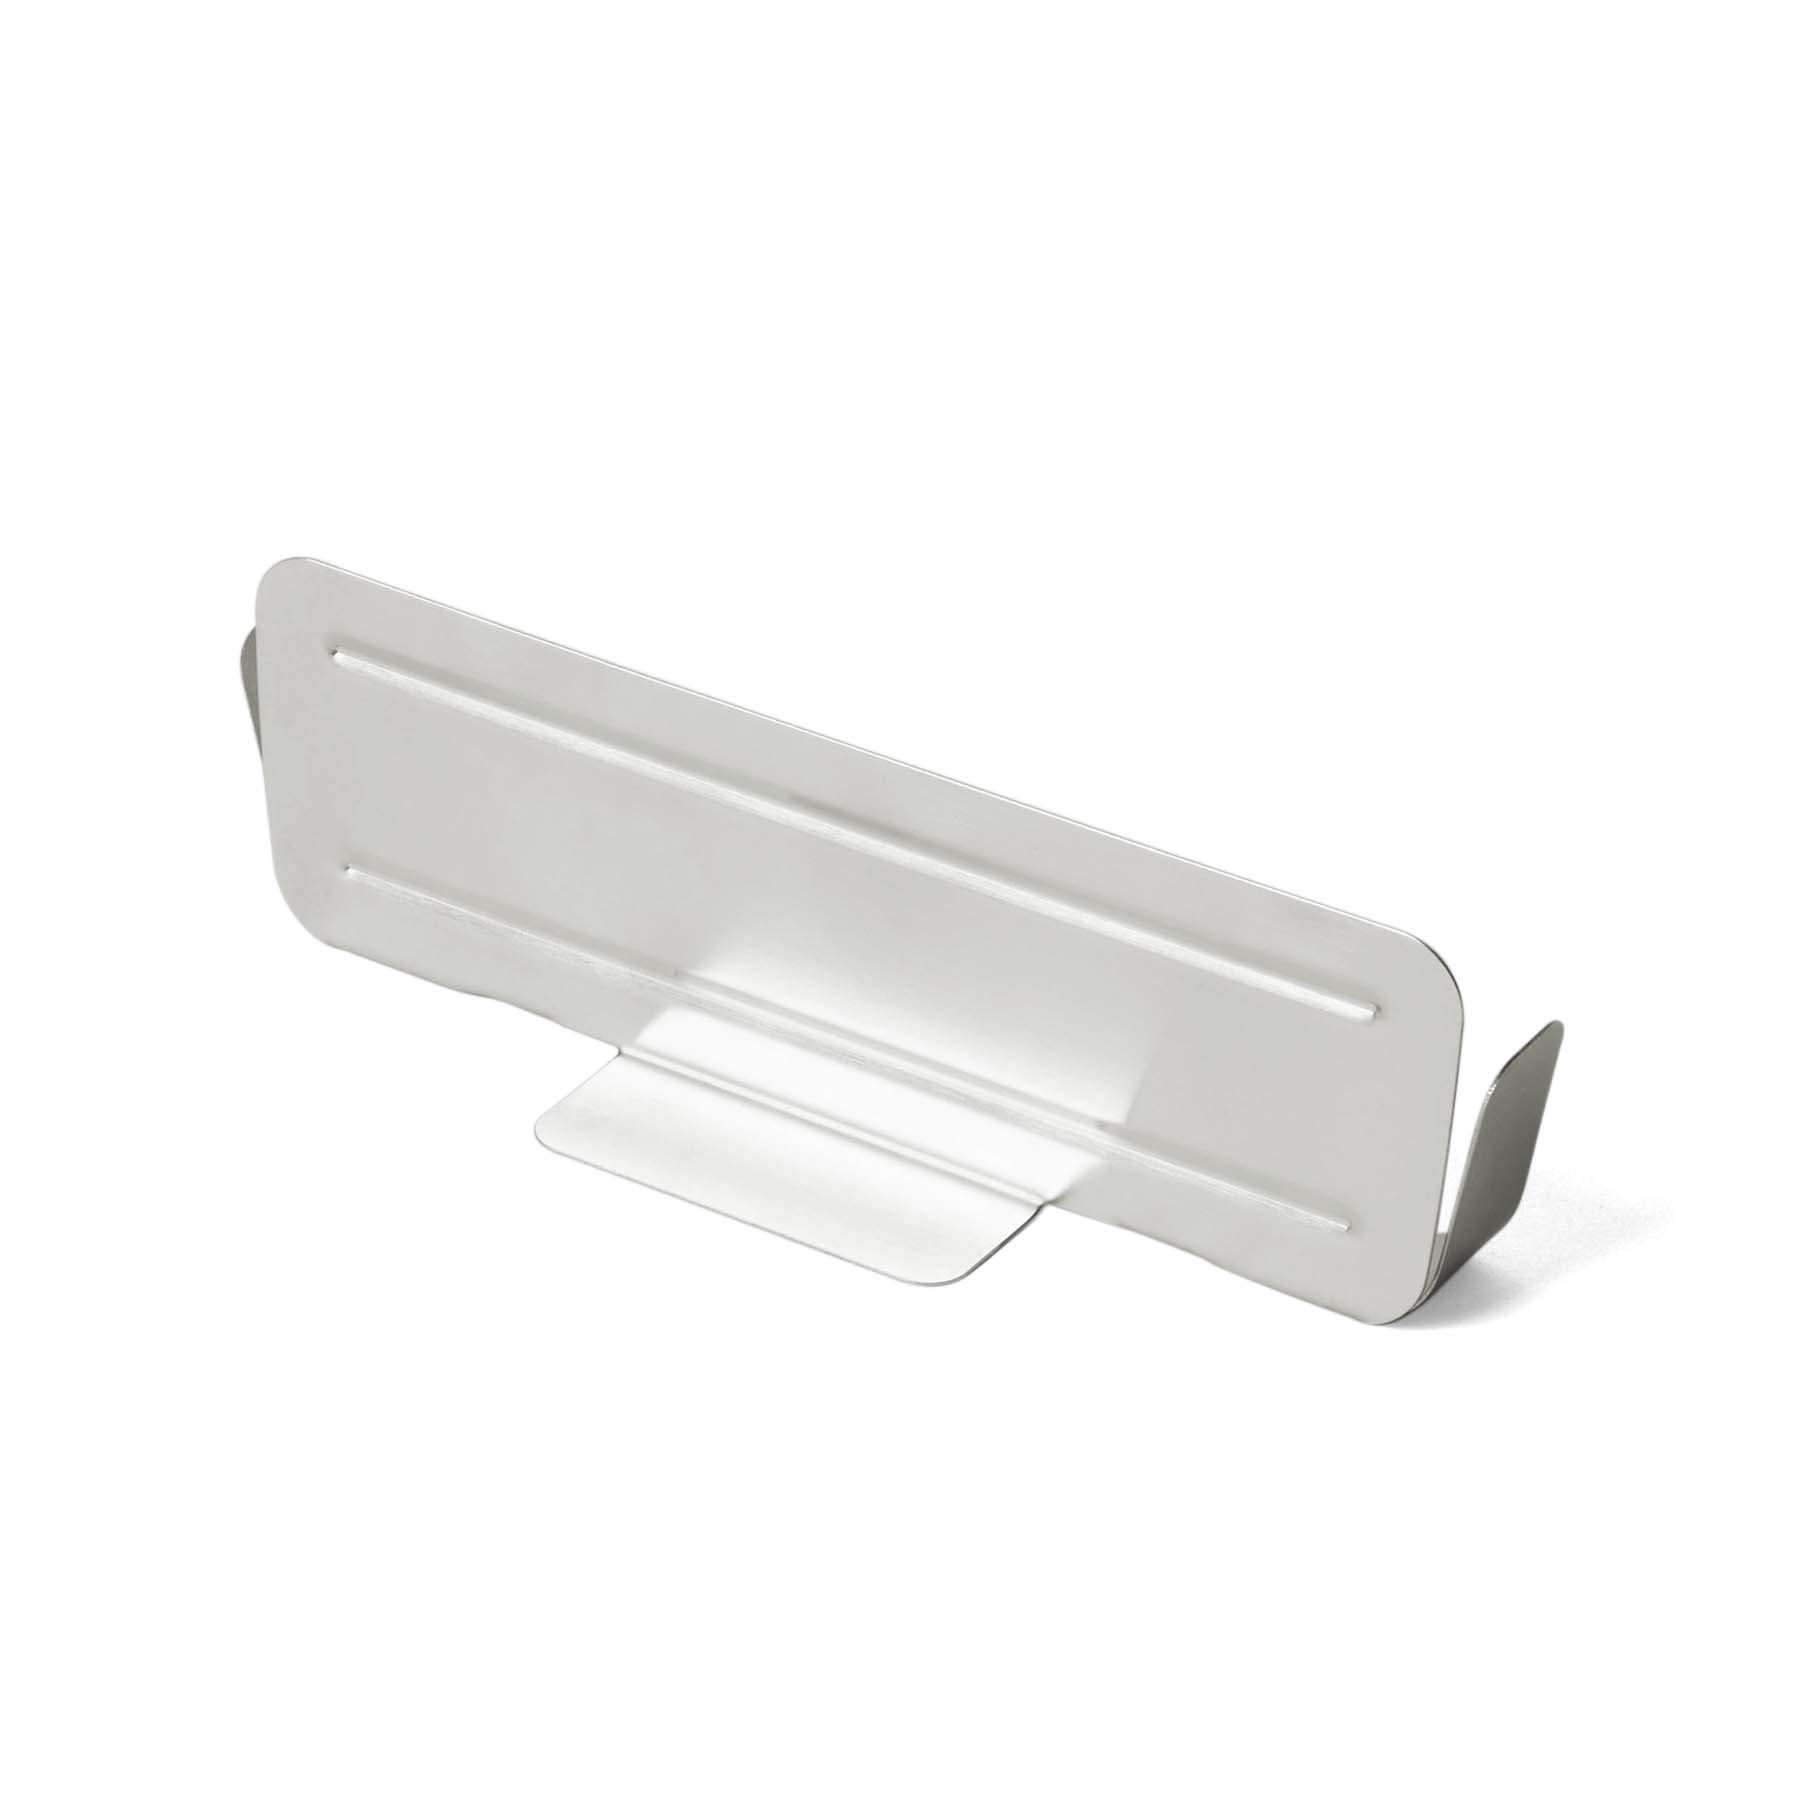 ECO Brotbox Lunchbox Bento Flex+, Edelstahl, flexibler Trennsteg, auslaufsicher, spülmaschinengeeignet